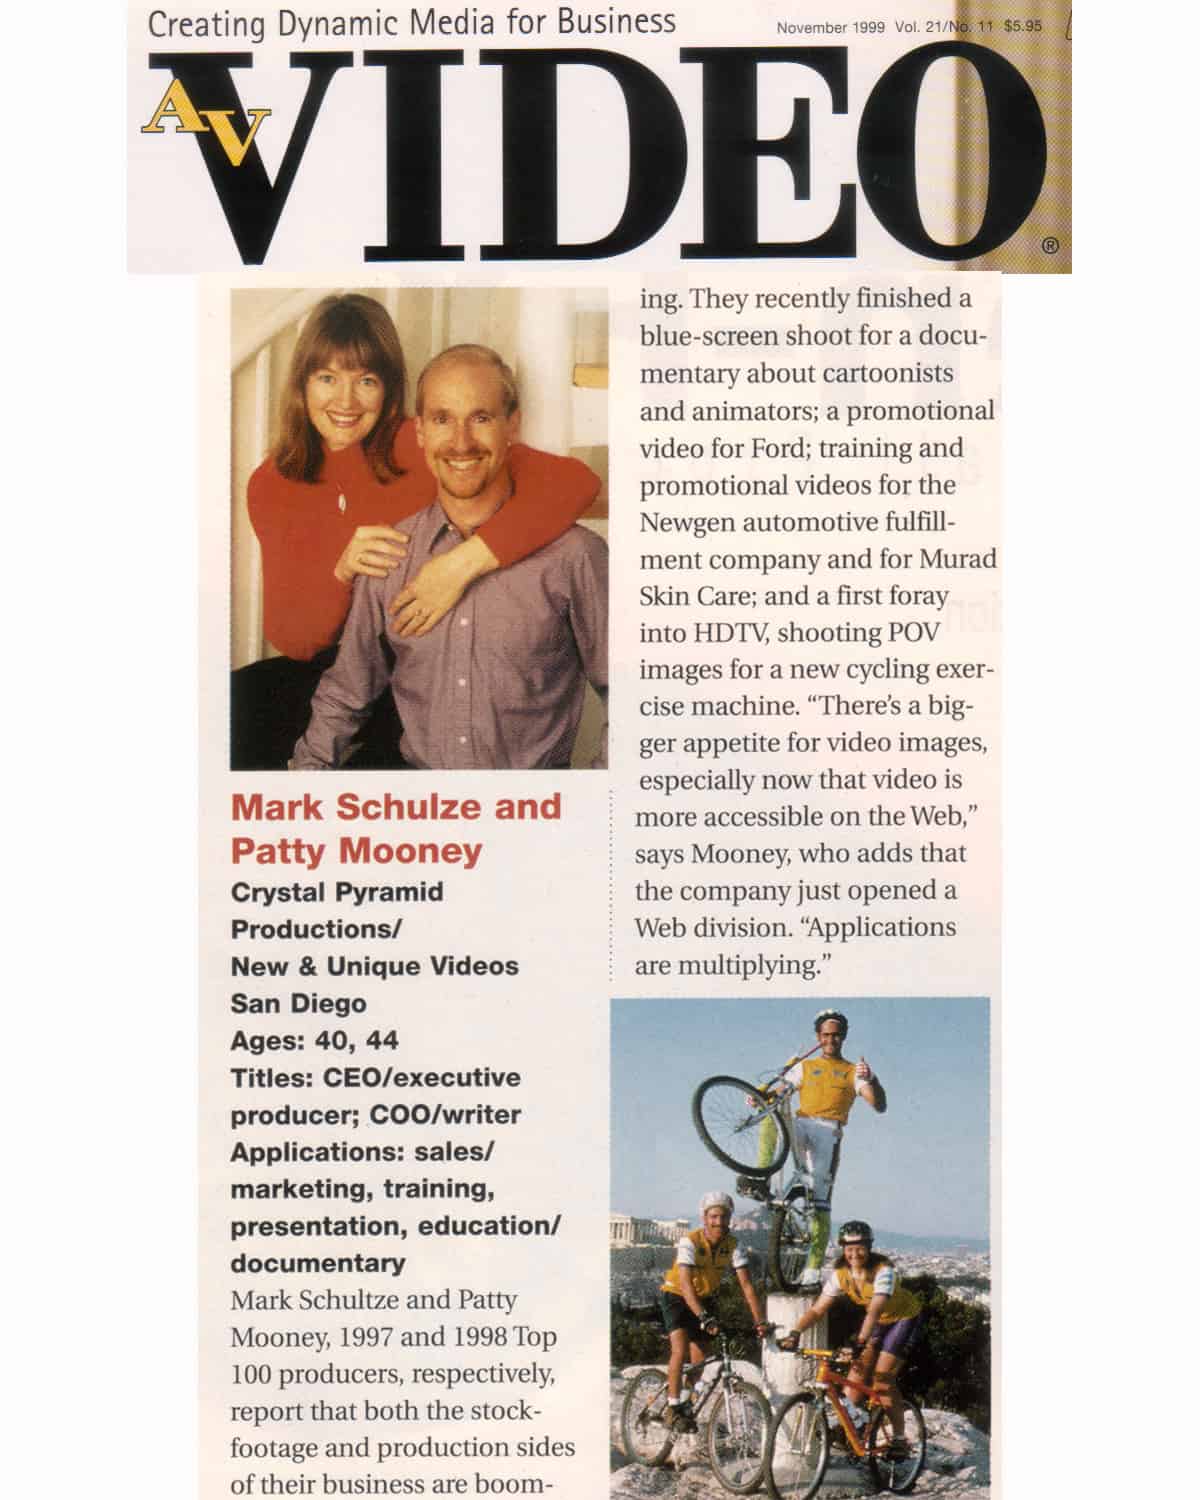 1999 av magazine article stock footage library new & unique videos